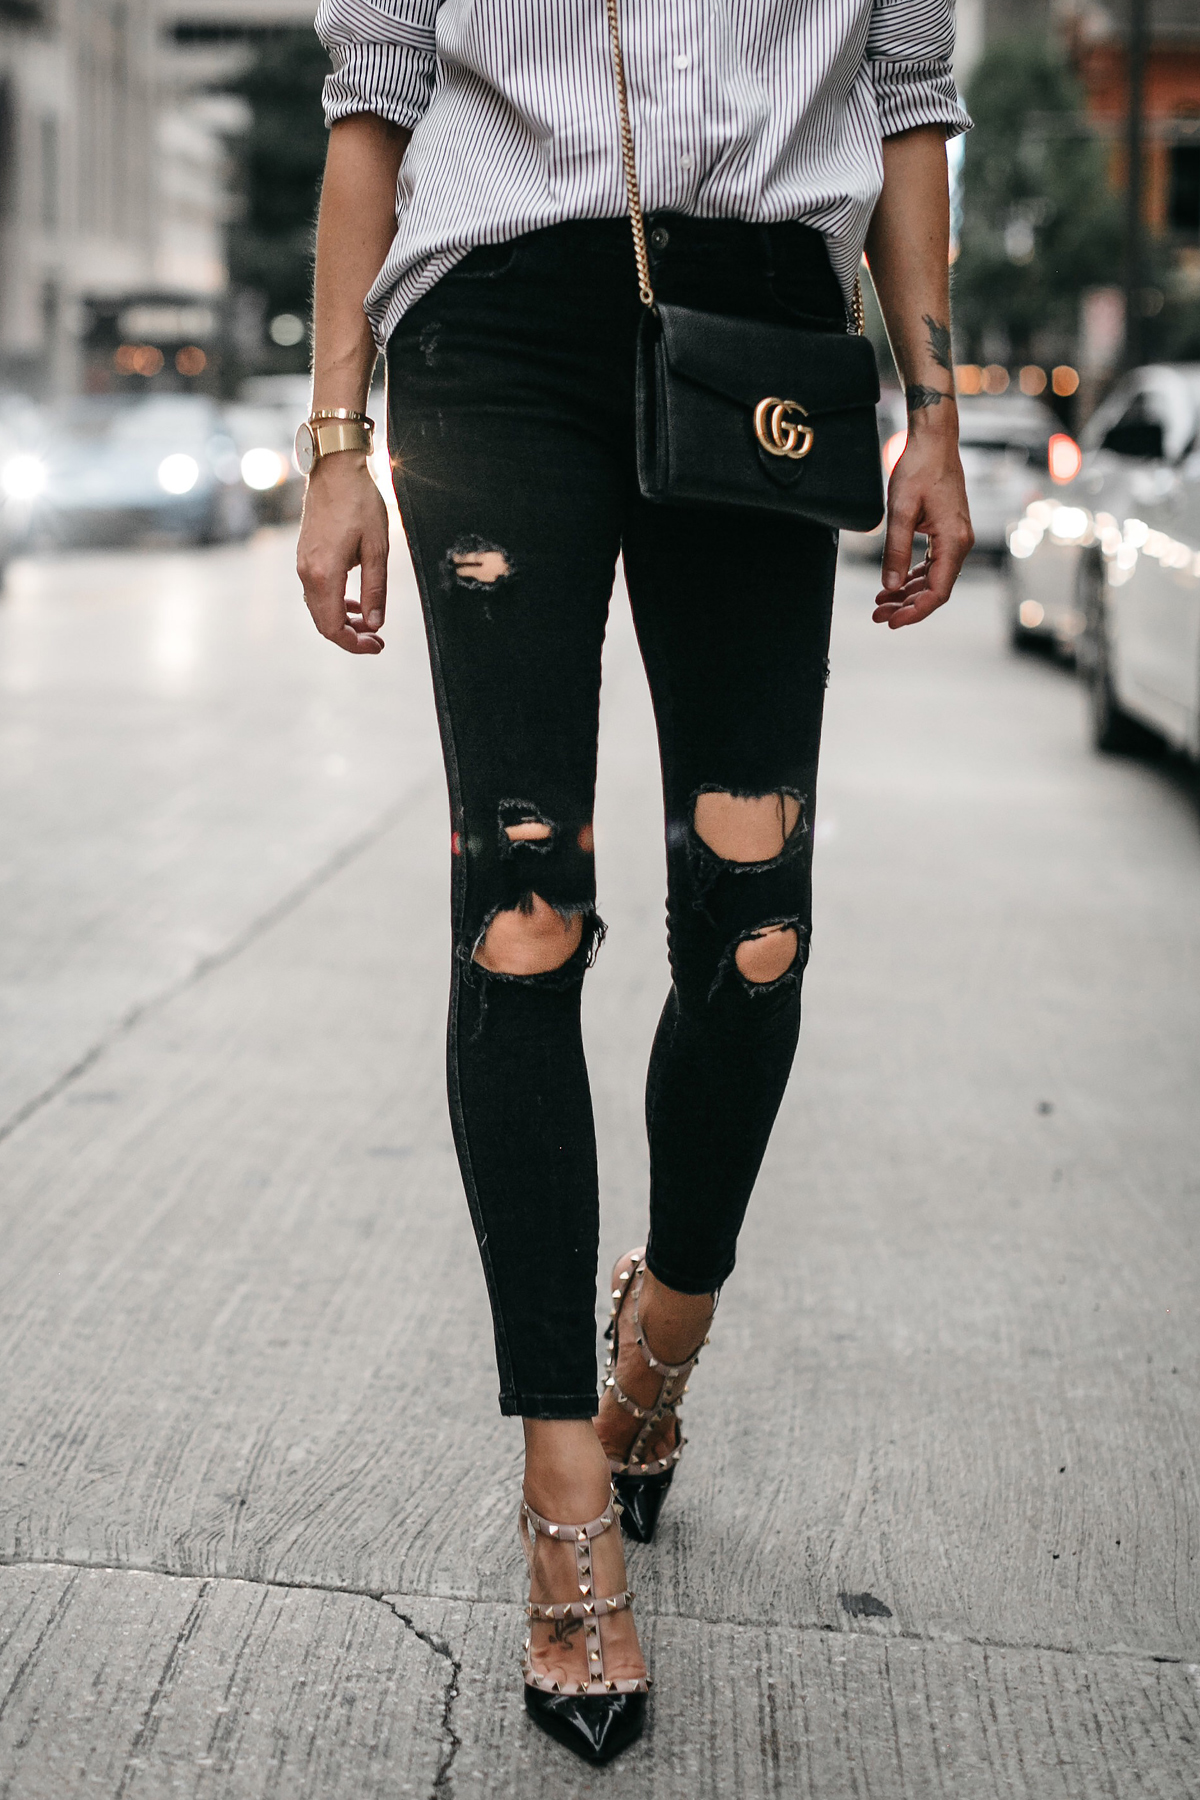 Zara Black Ripped Skinny Jeans Valentino Rockstud Pumps Gucci Handbag Fashion Jackson Dallas Blogger Fashion Blogger Street Style